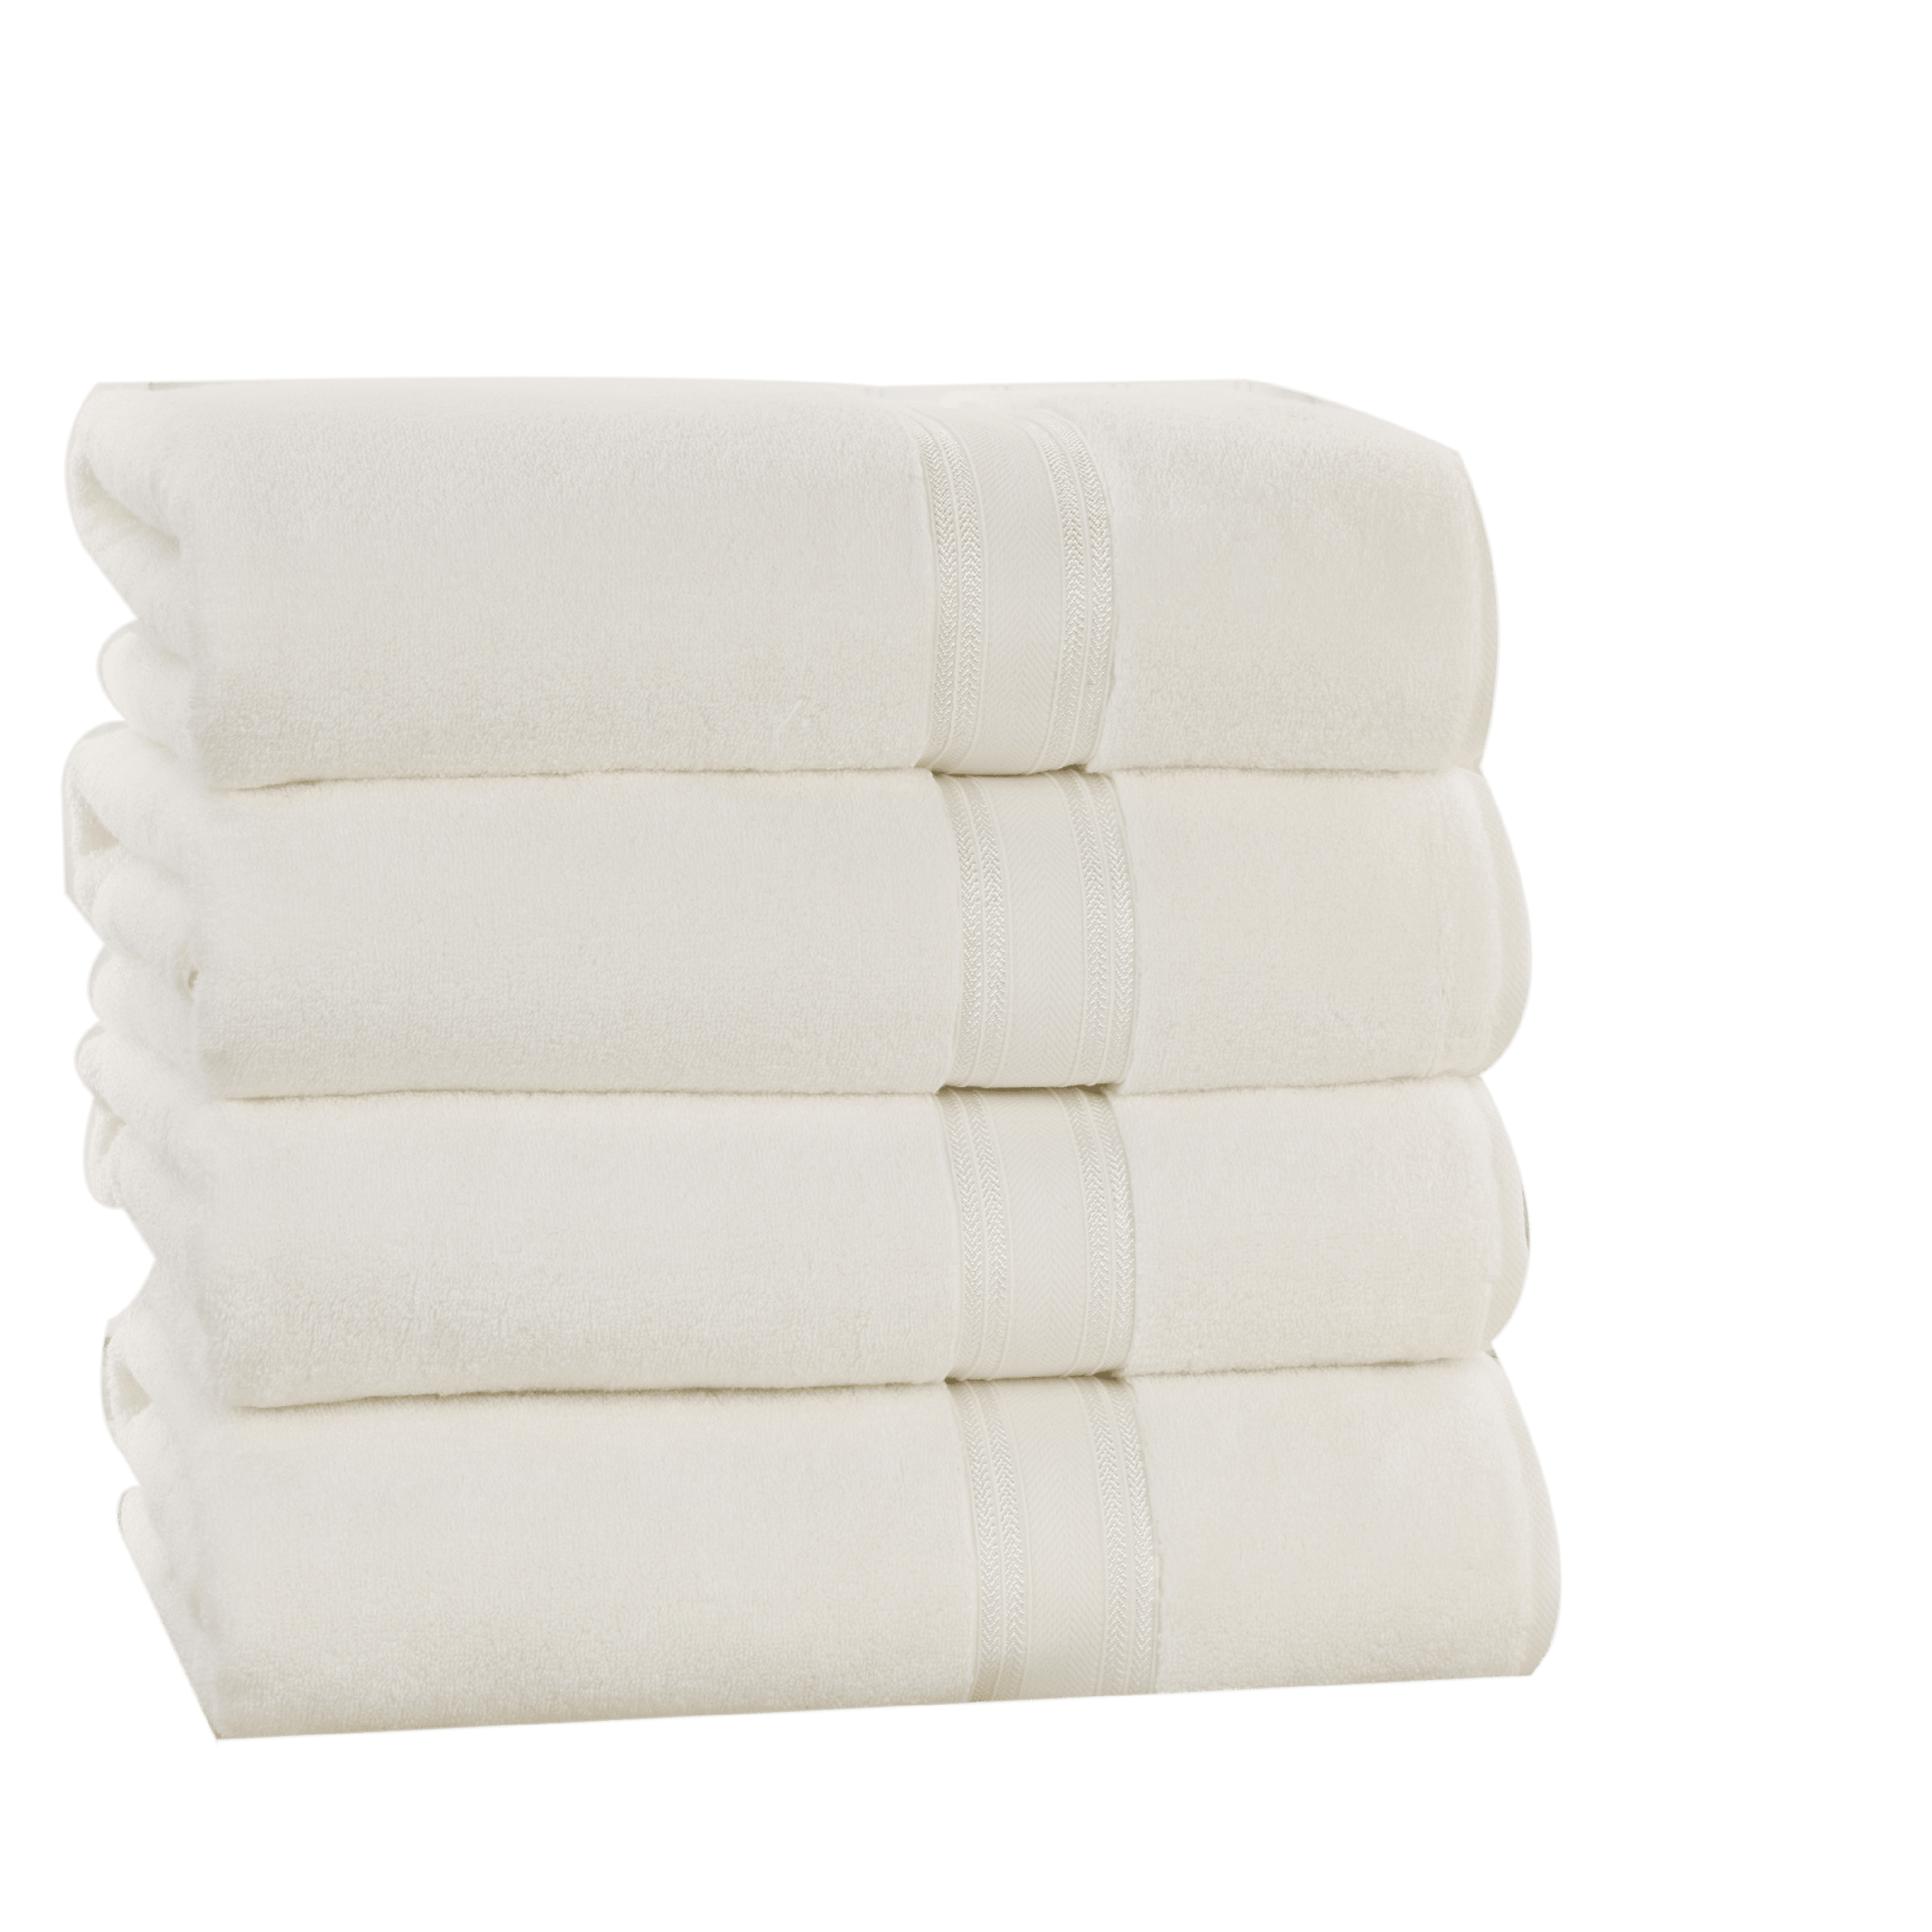 Affinitylinens Soft & Thick Zero Twist Cotton Pack of 4 Bath Towels Chocolate 